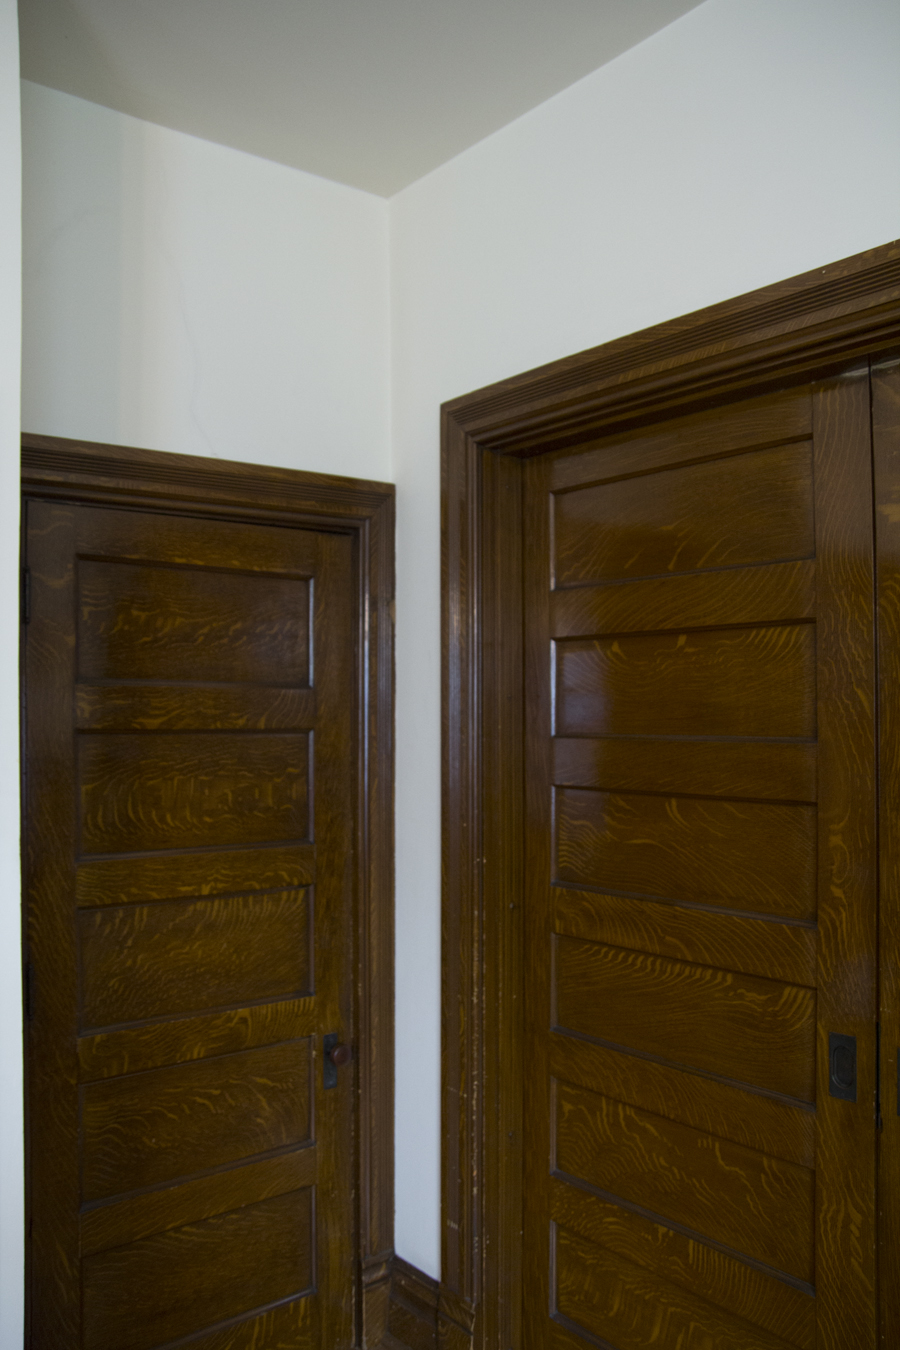 Diningroom: Original faux graining on two doors